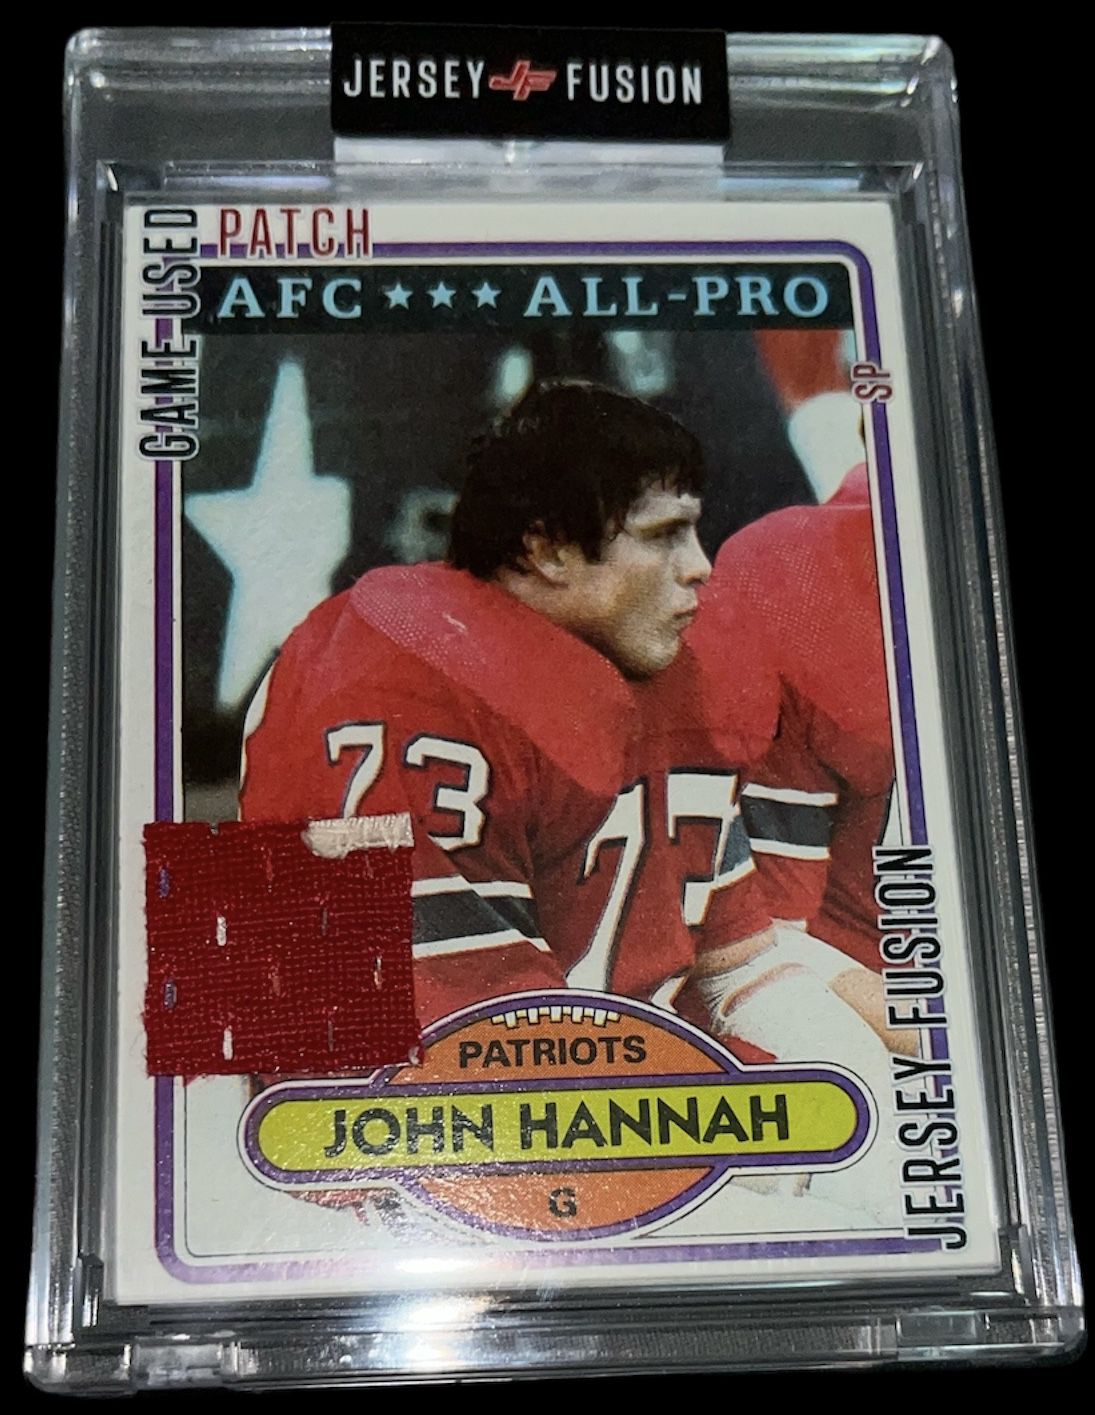 John Hannah Jersey Fusion Card